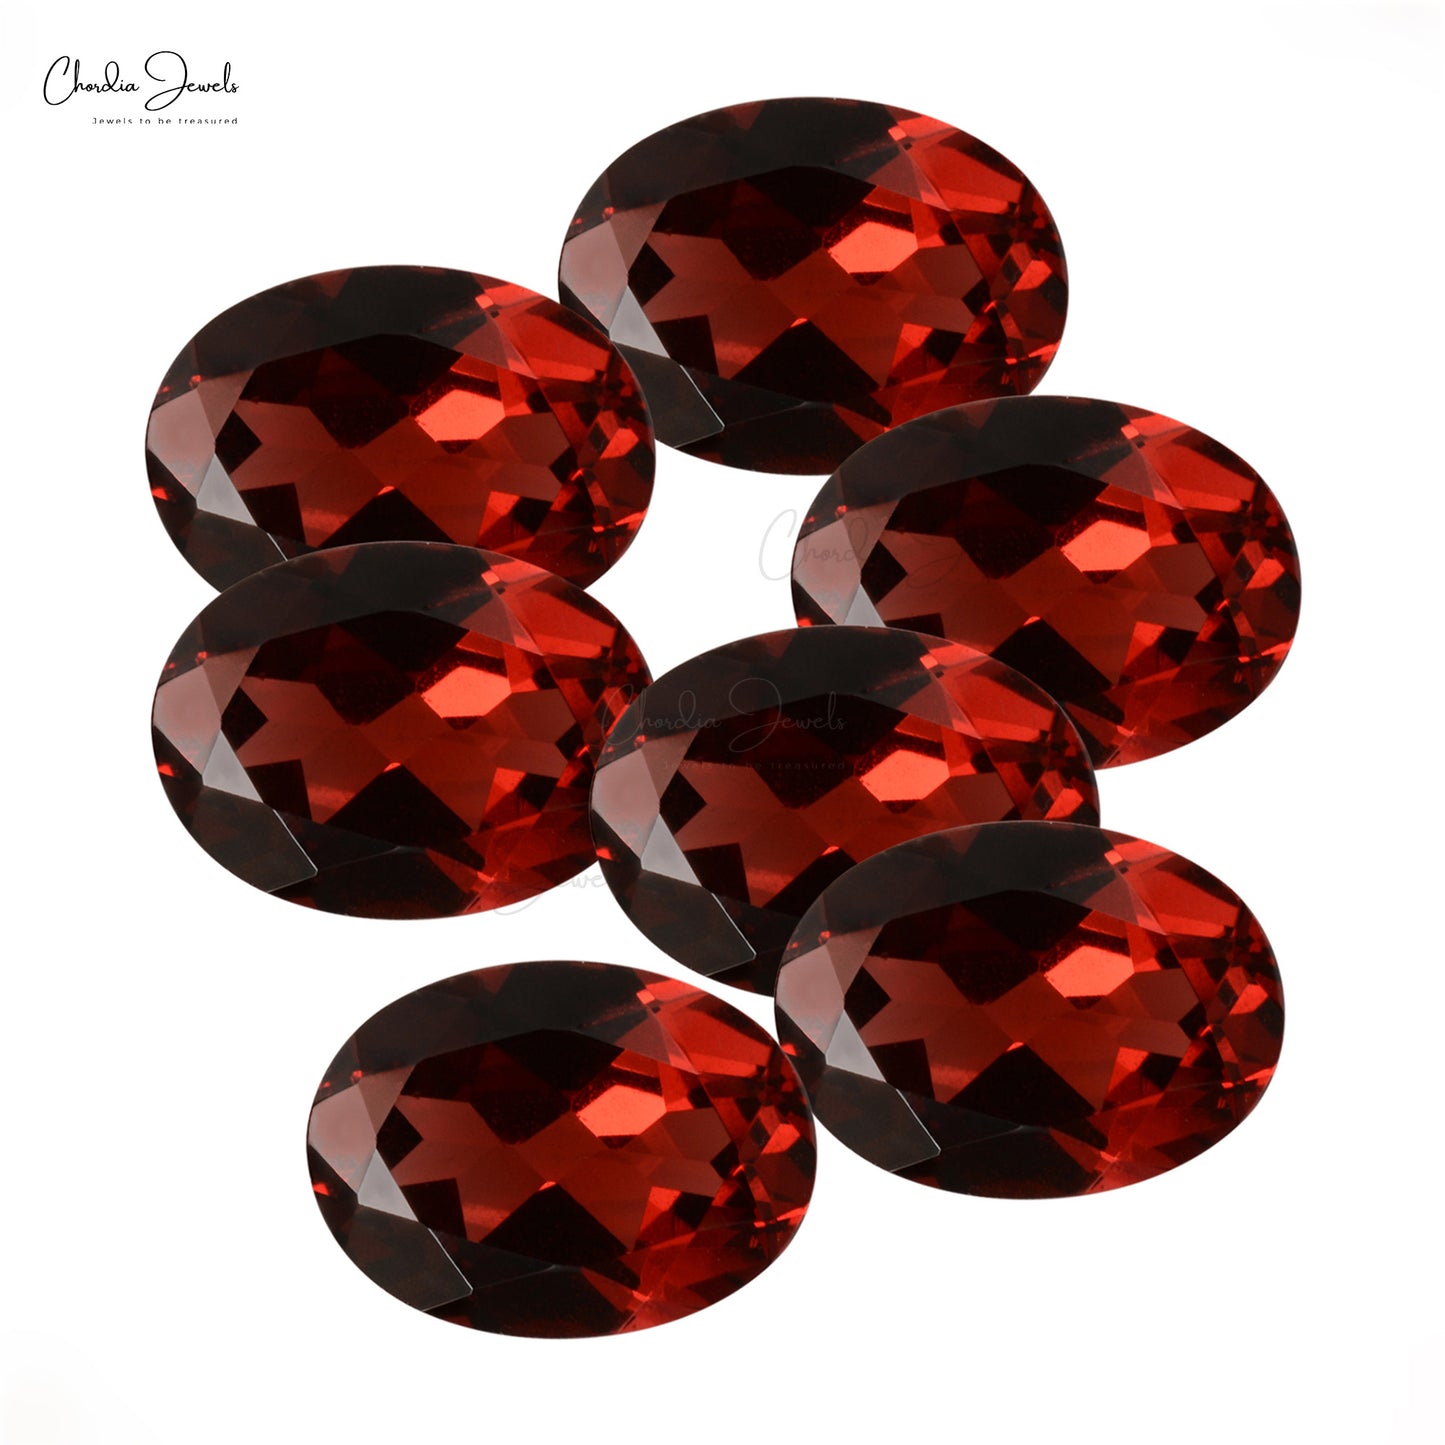 3 Carat Oval Cut Semi Precious Garnet Gemstone for Jewelry Setting, 1 Piece